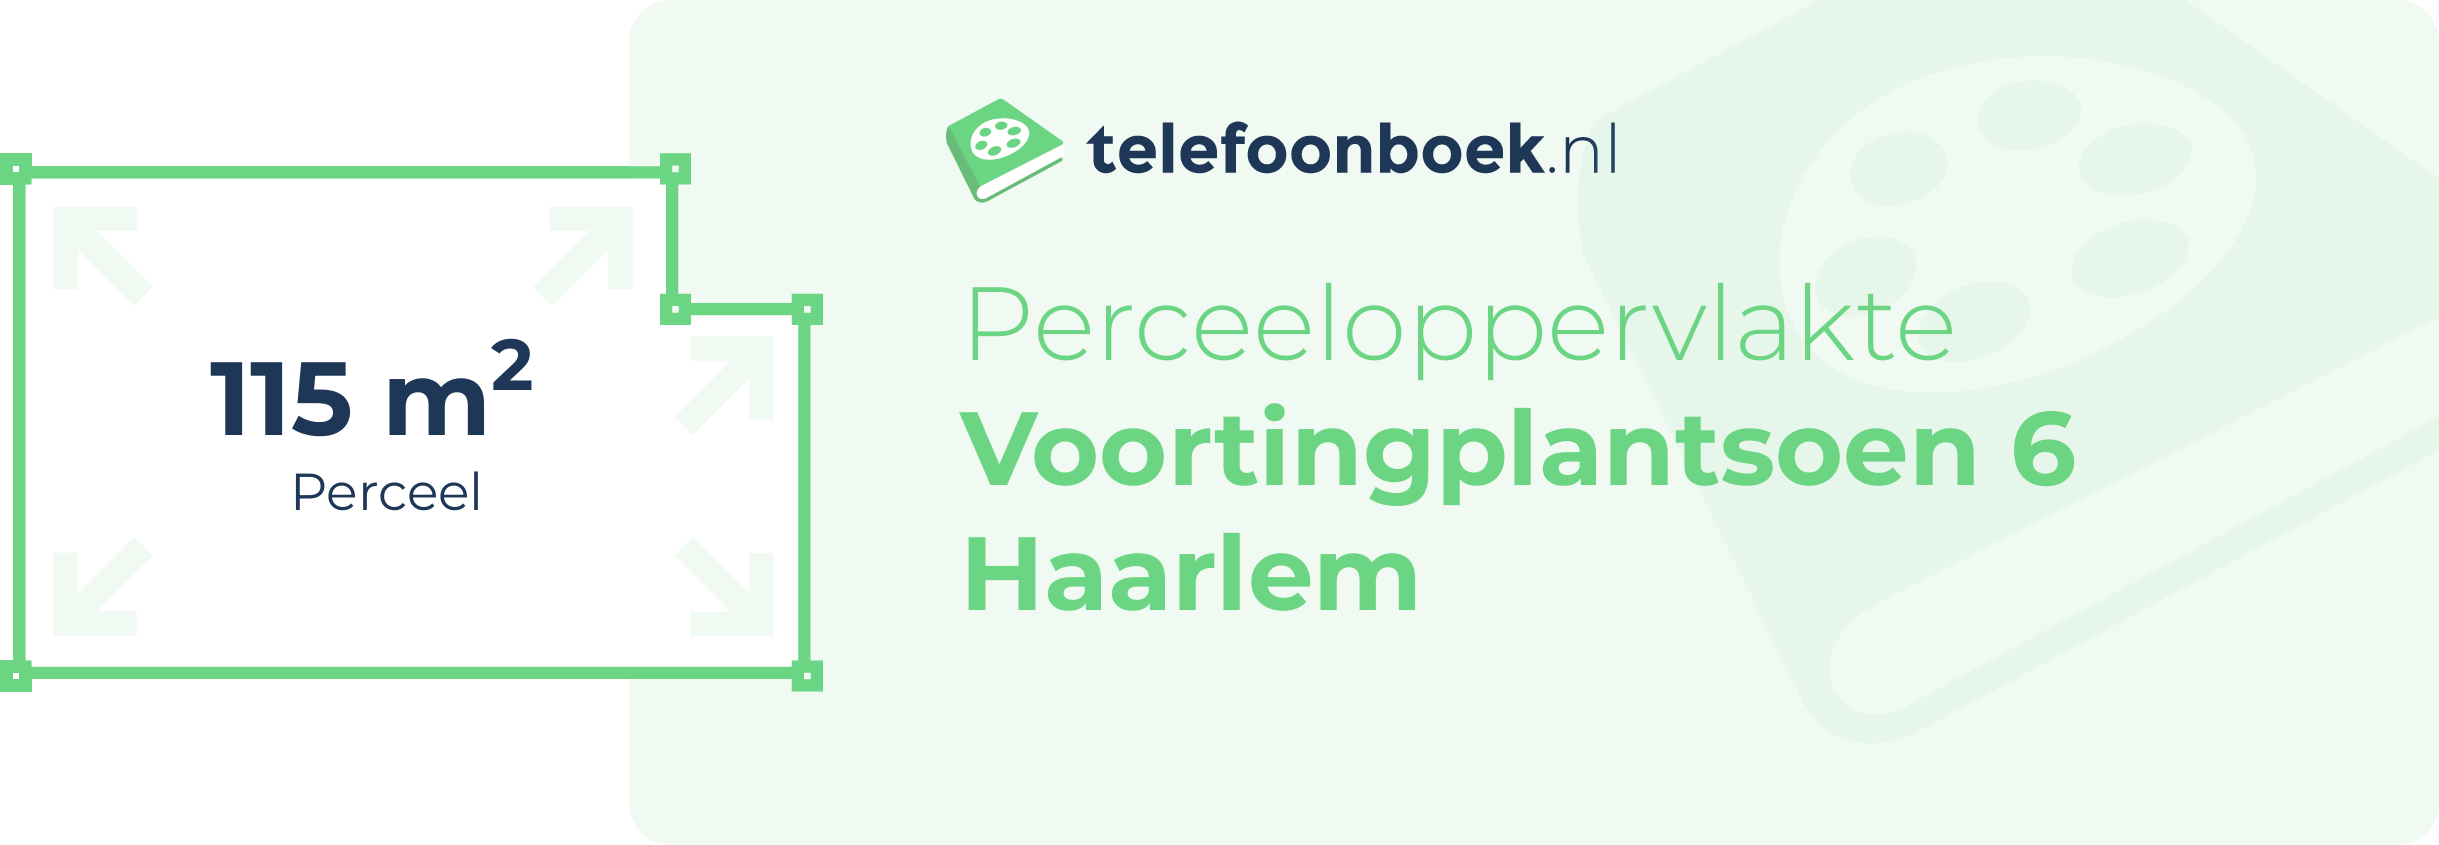 Perceeloppervlakte Voortingplantsoen 6 Haarlem